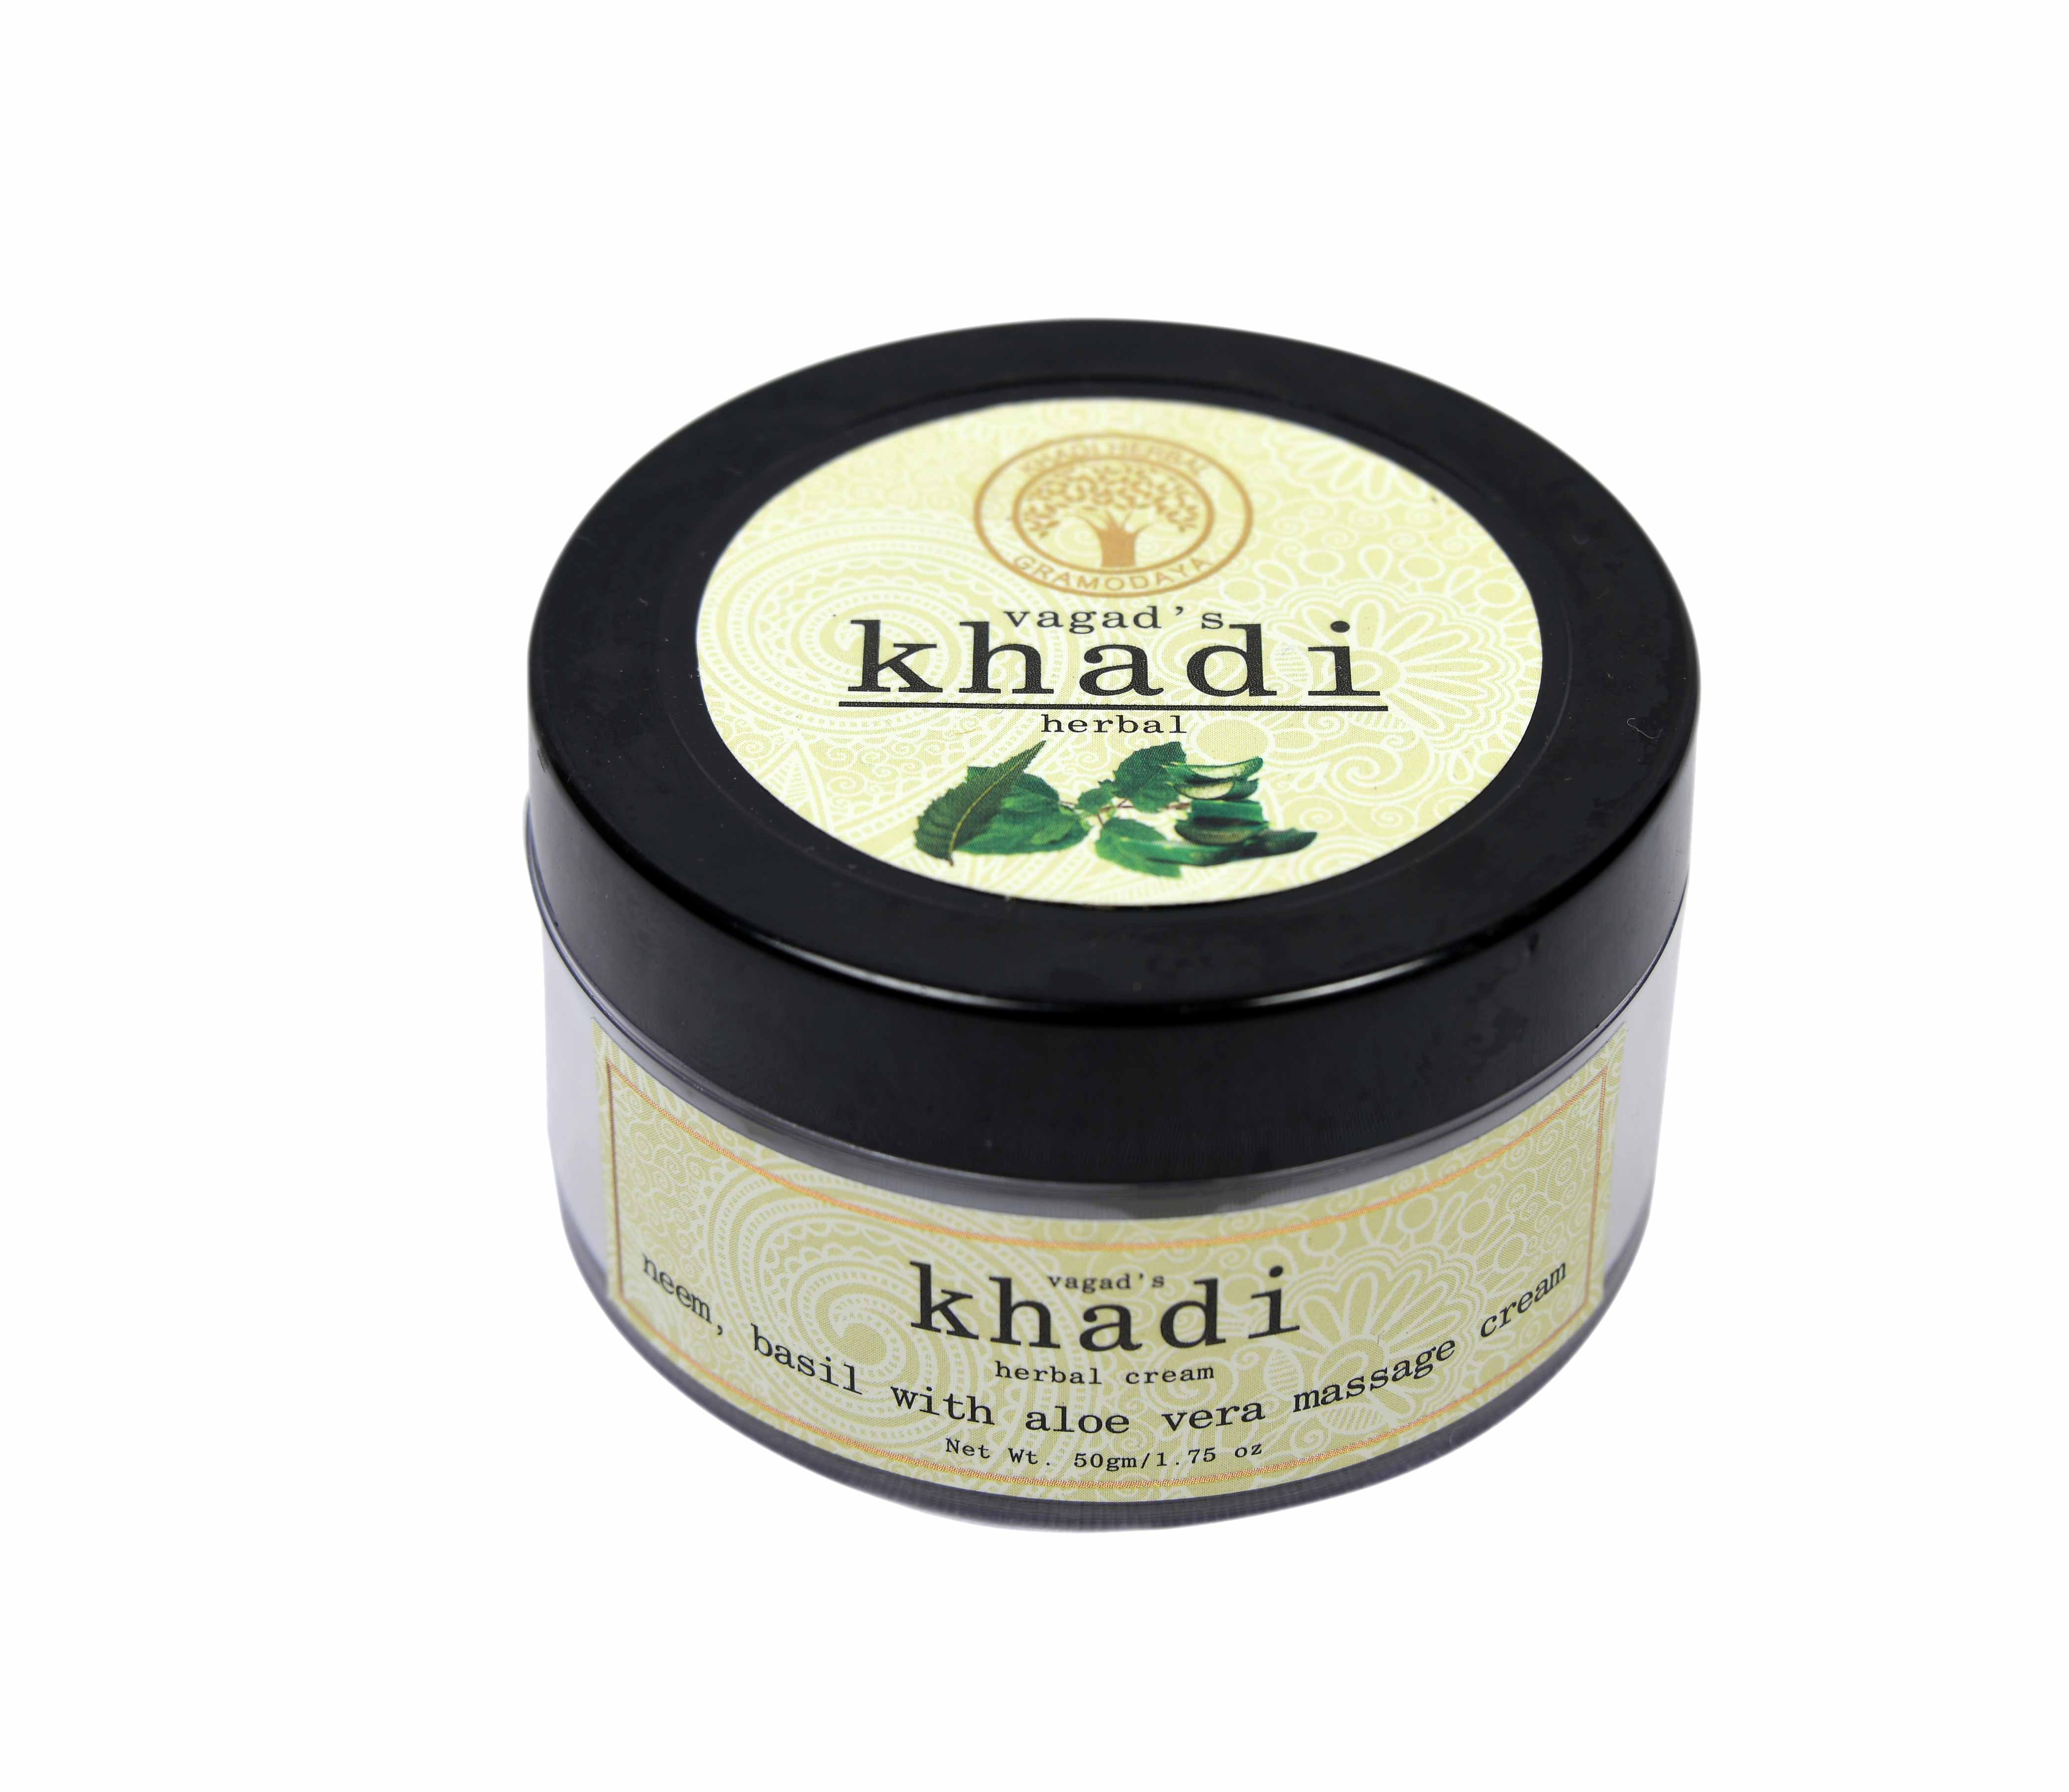 Buy Vagad's Khadi Neem Basil With Aloevera Massage Cream at Best Price Online